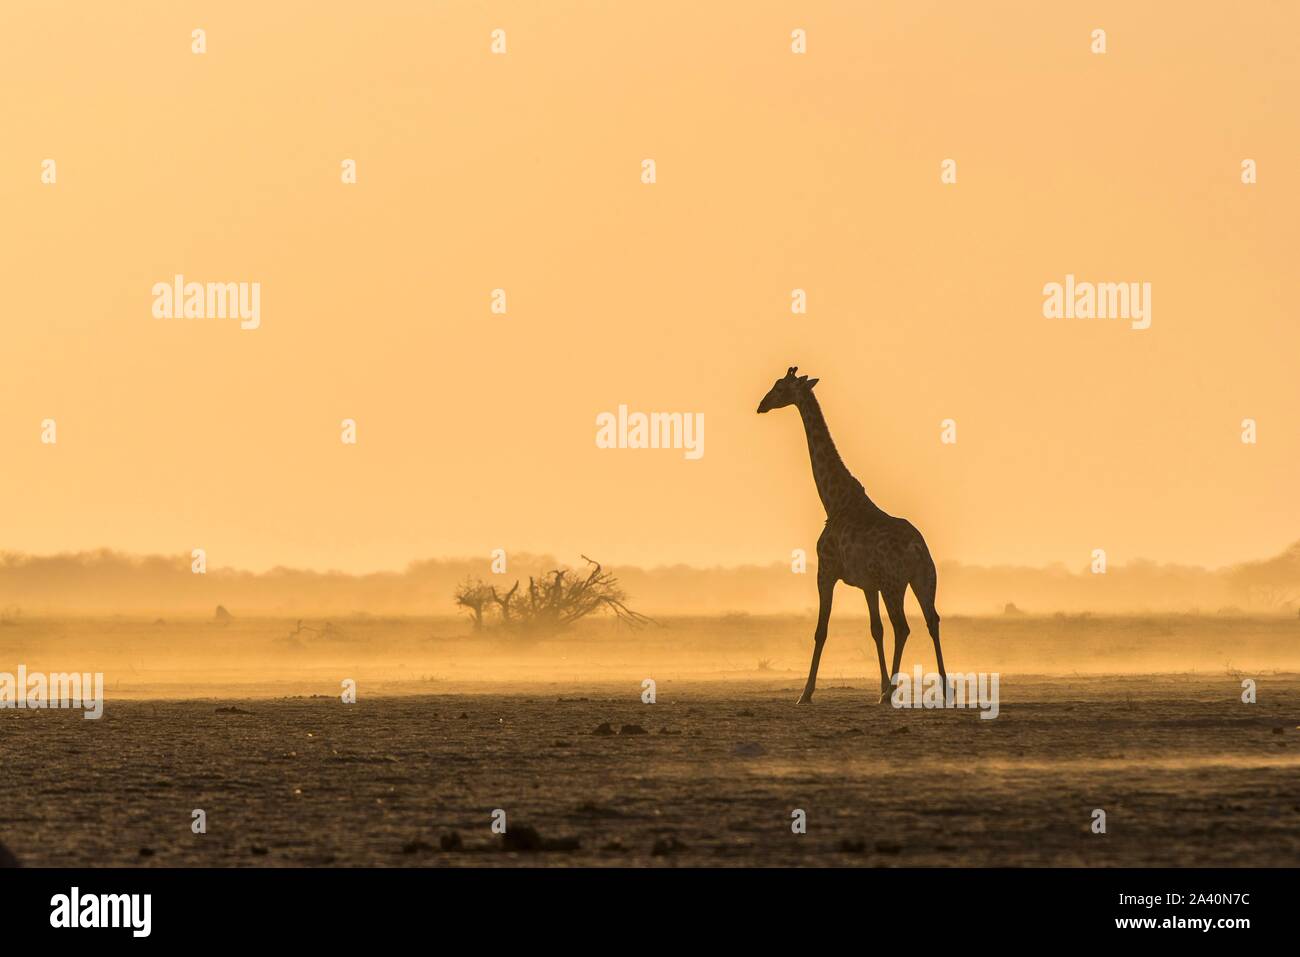 A Angolan Giraffe (Giraffa camelopardalis angolensis) runs in the evening light in the dusty savannah, Nxai Pan National Park, Ngamiland, Botswana Stock Photo